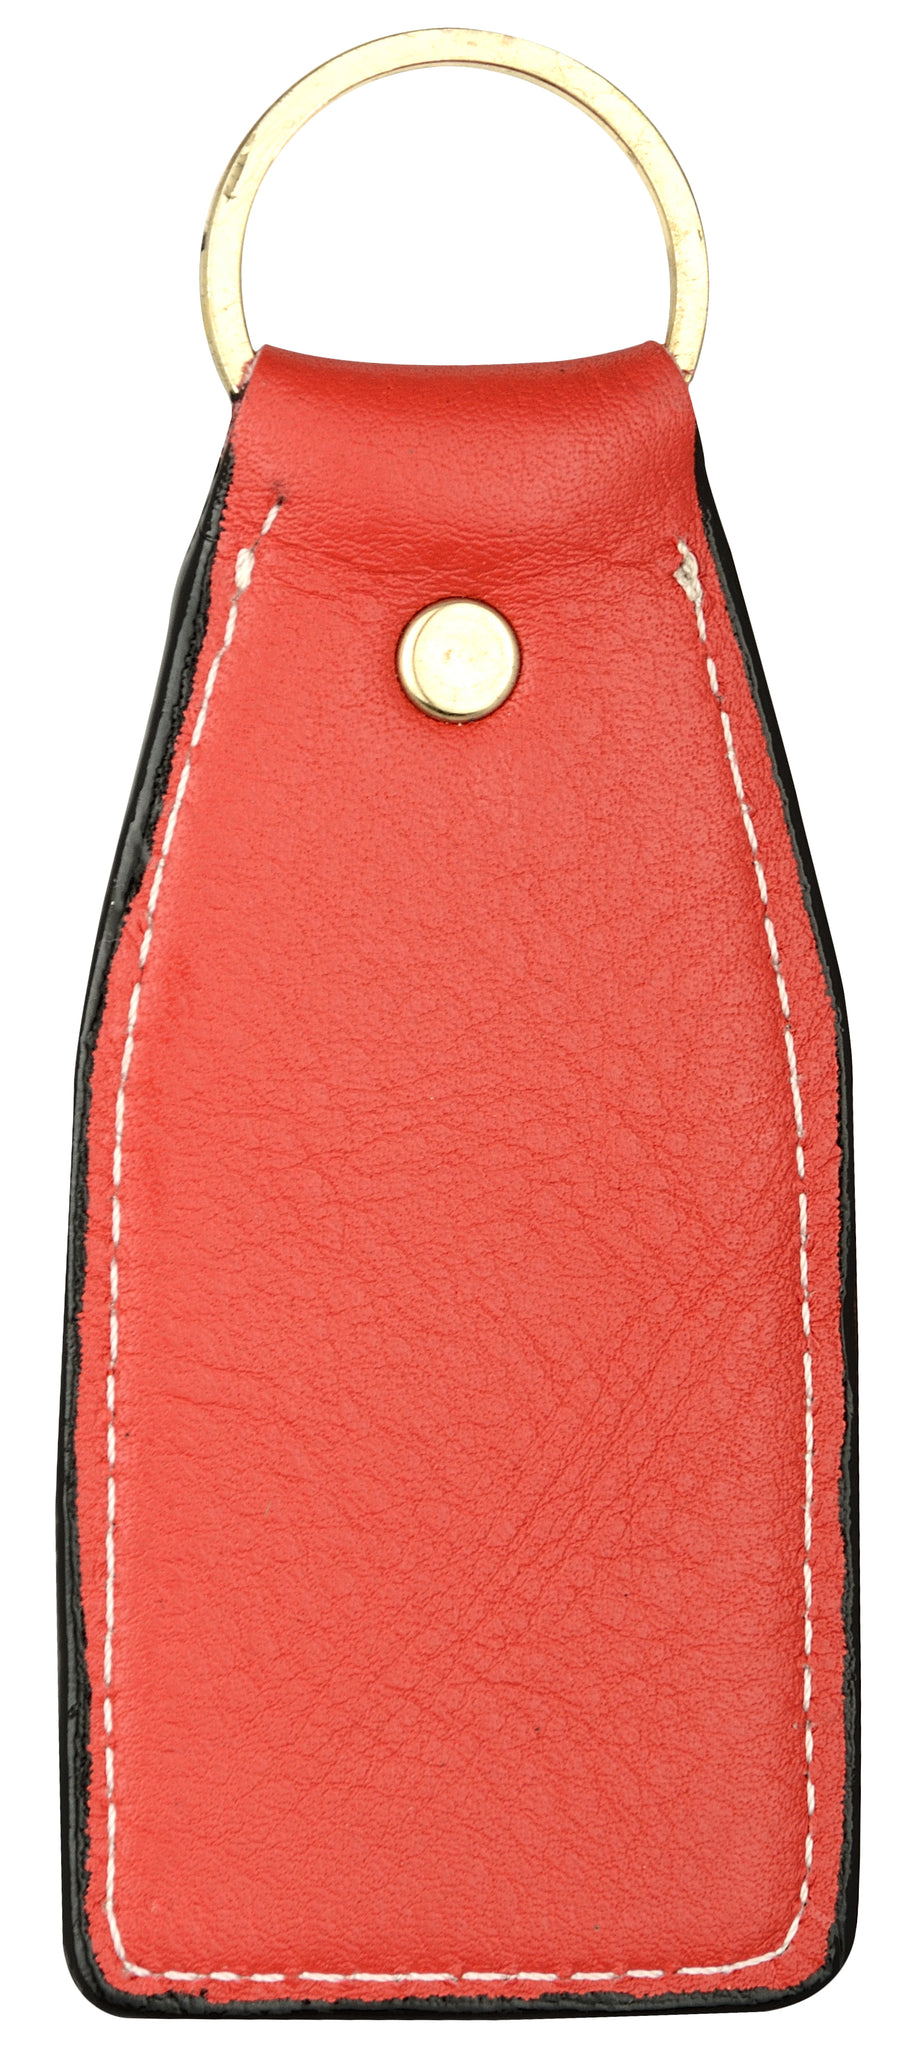 Orangish red leather key chain